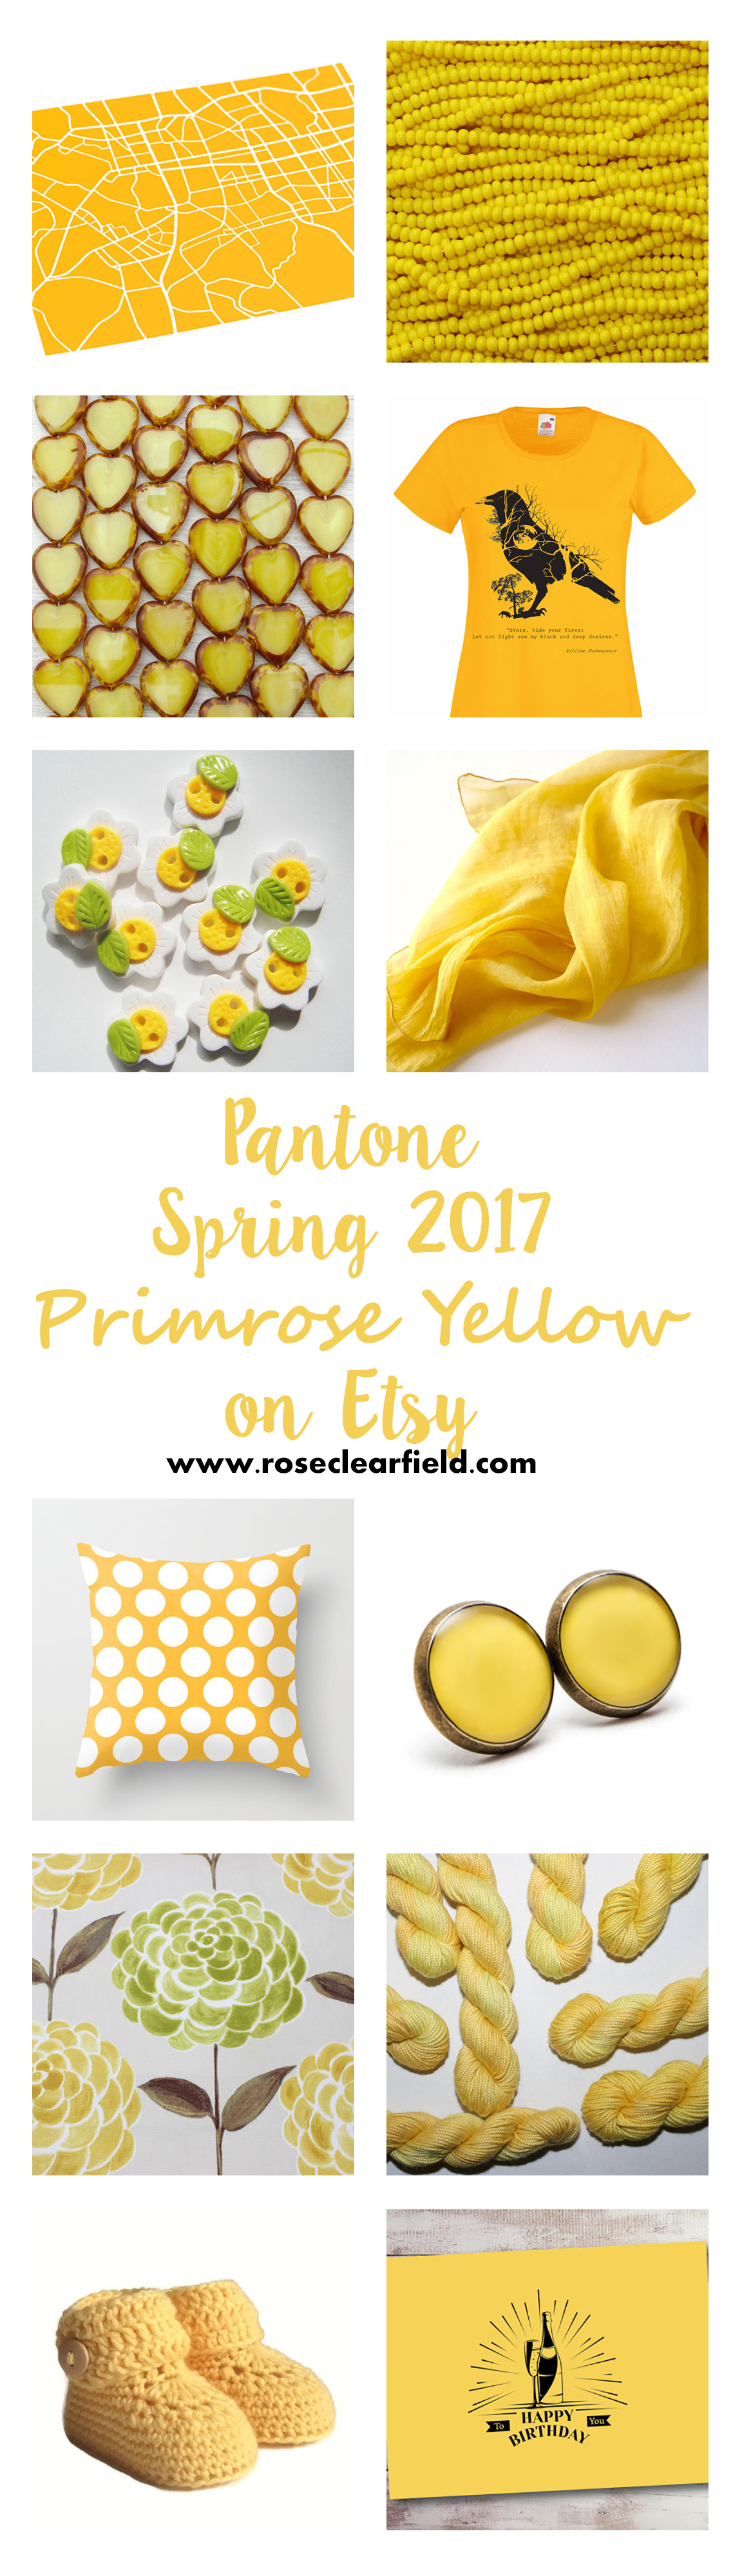 Pantone Spring 2017 Primrose Yellow Etsy Picks | https://www.roseclearfield.com